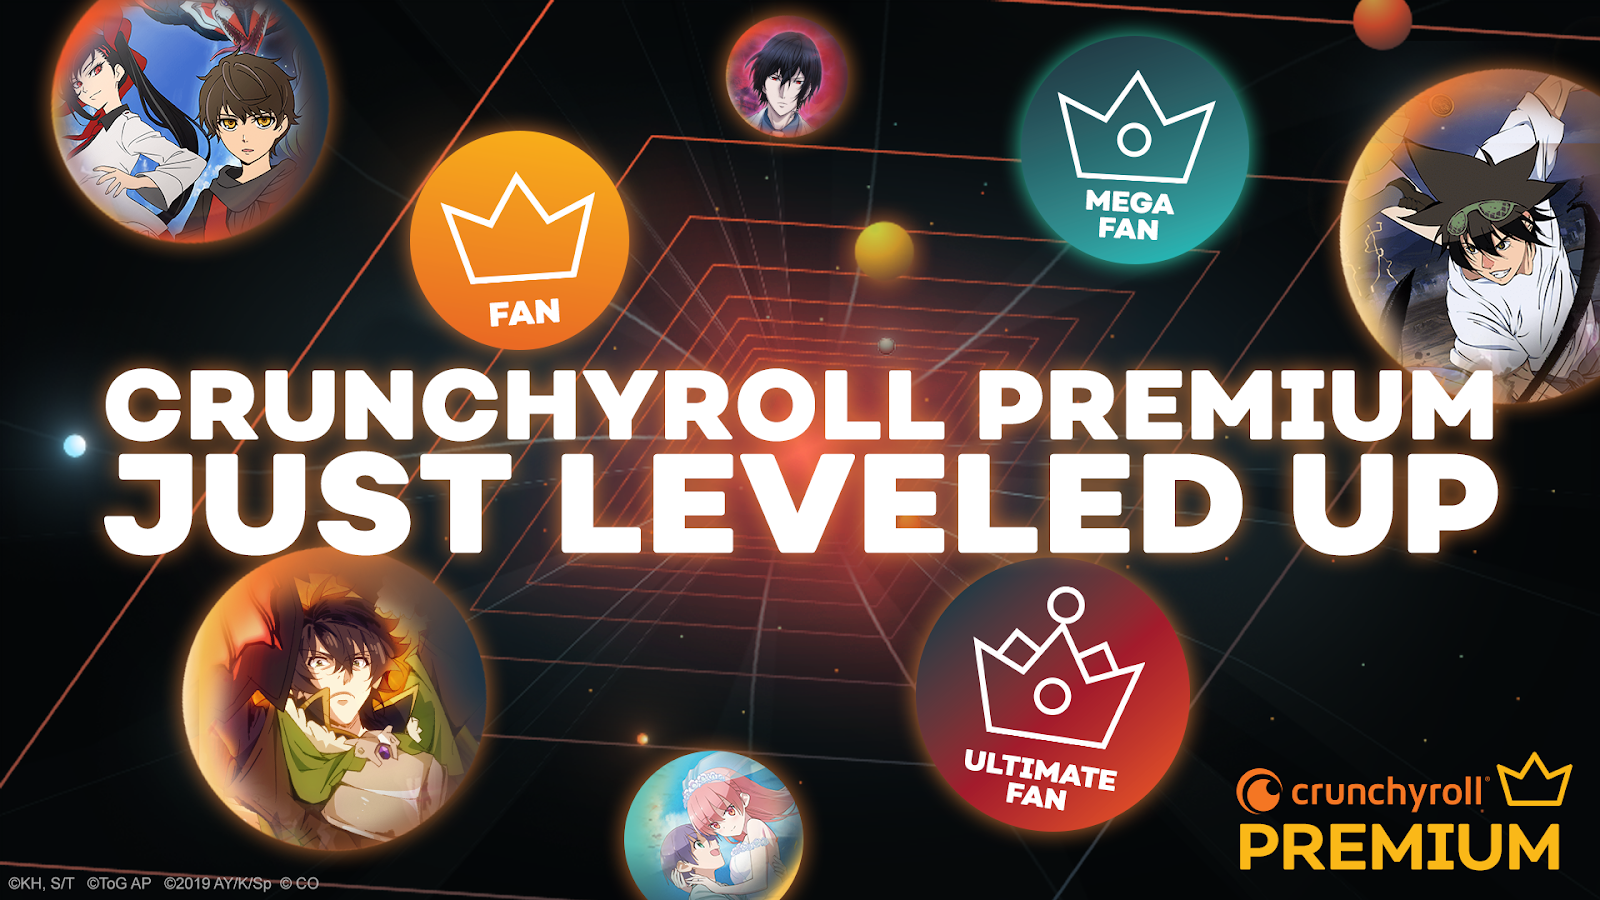 crunchyroll premium - Crunchyroll aggiunge nuovi livelli di iscrizione per i fan degli anime